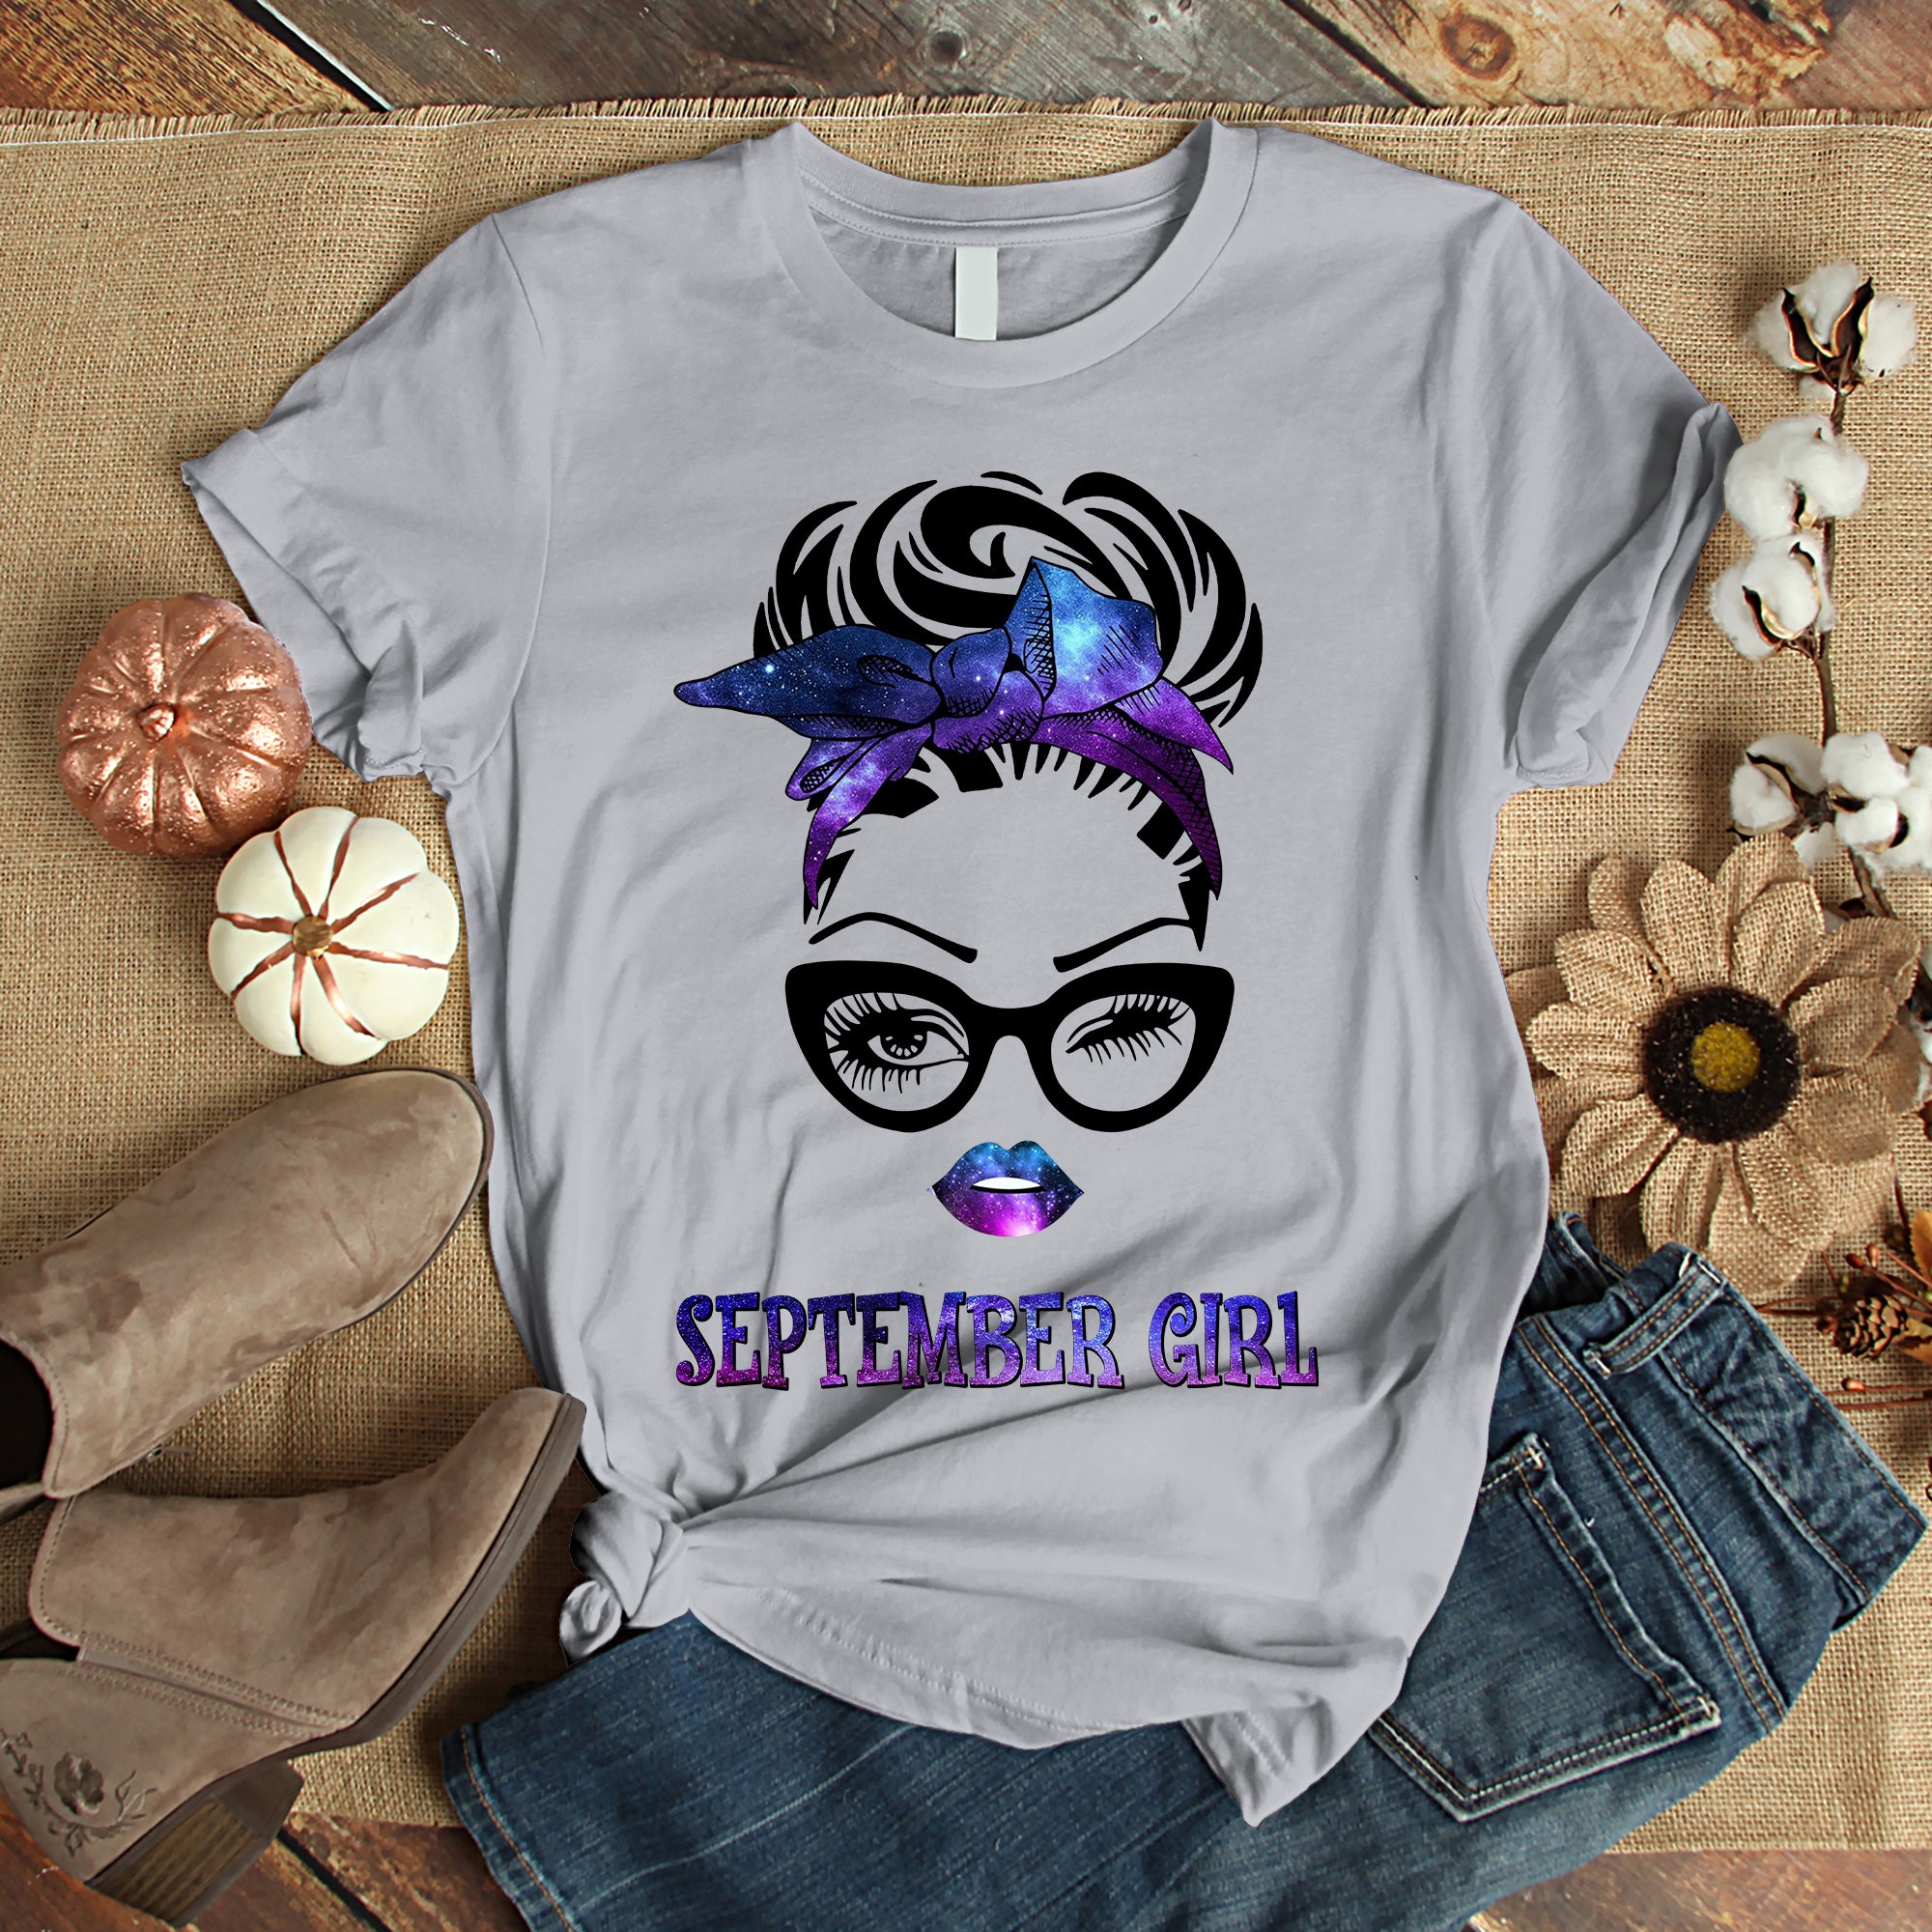 September Girl Birthday Shirt For Women, Girls, Sisters. Happy Birthday T-Shirt